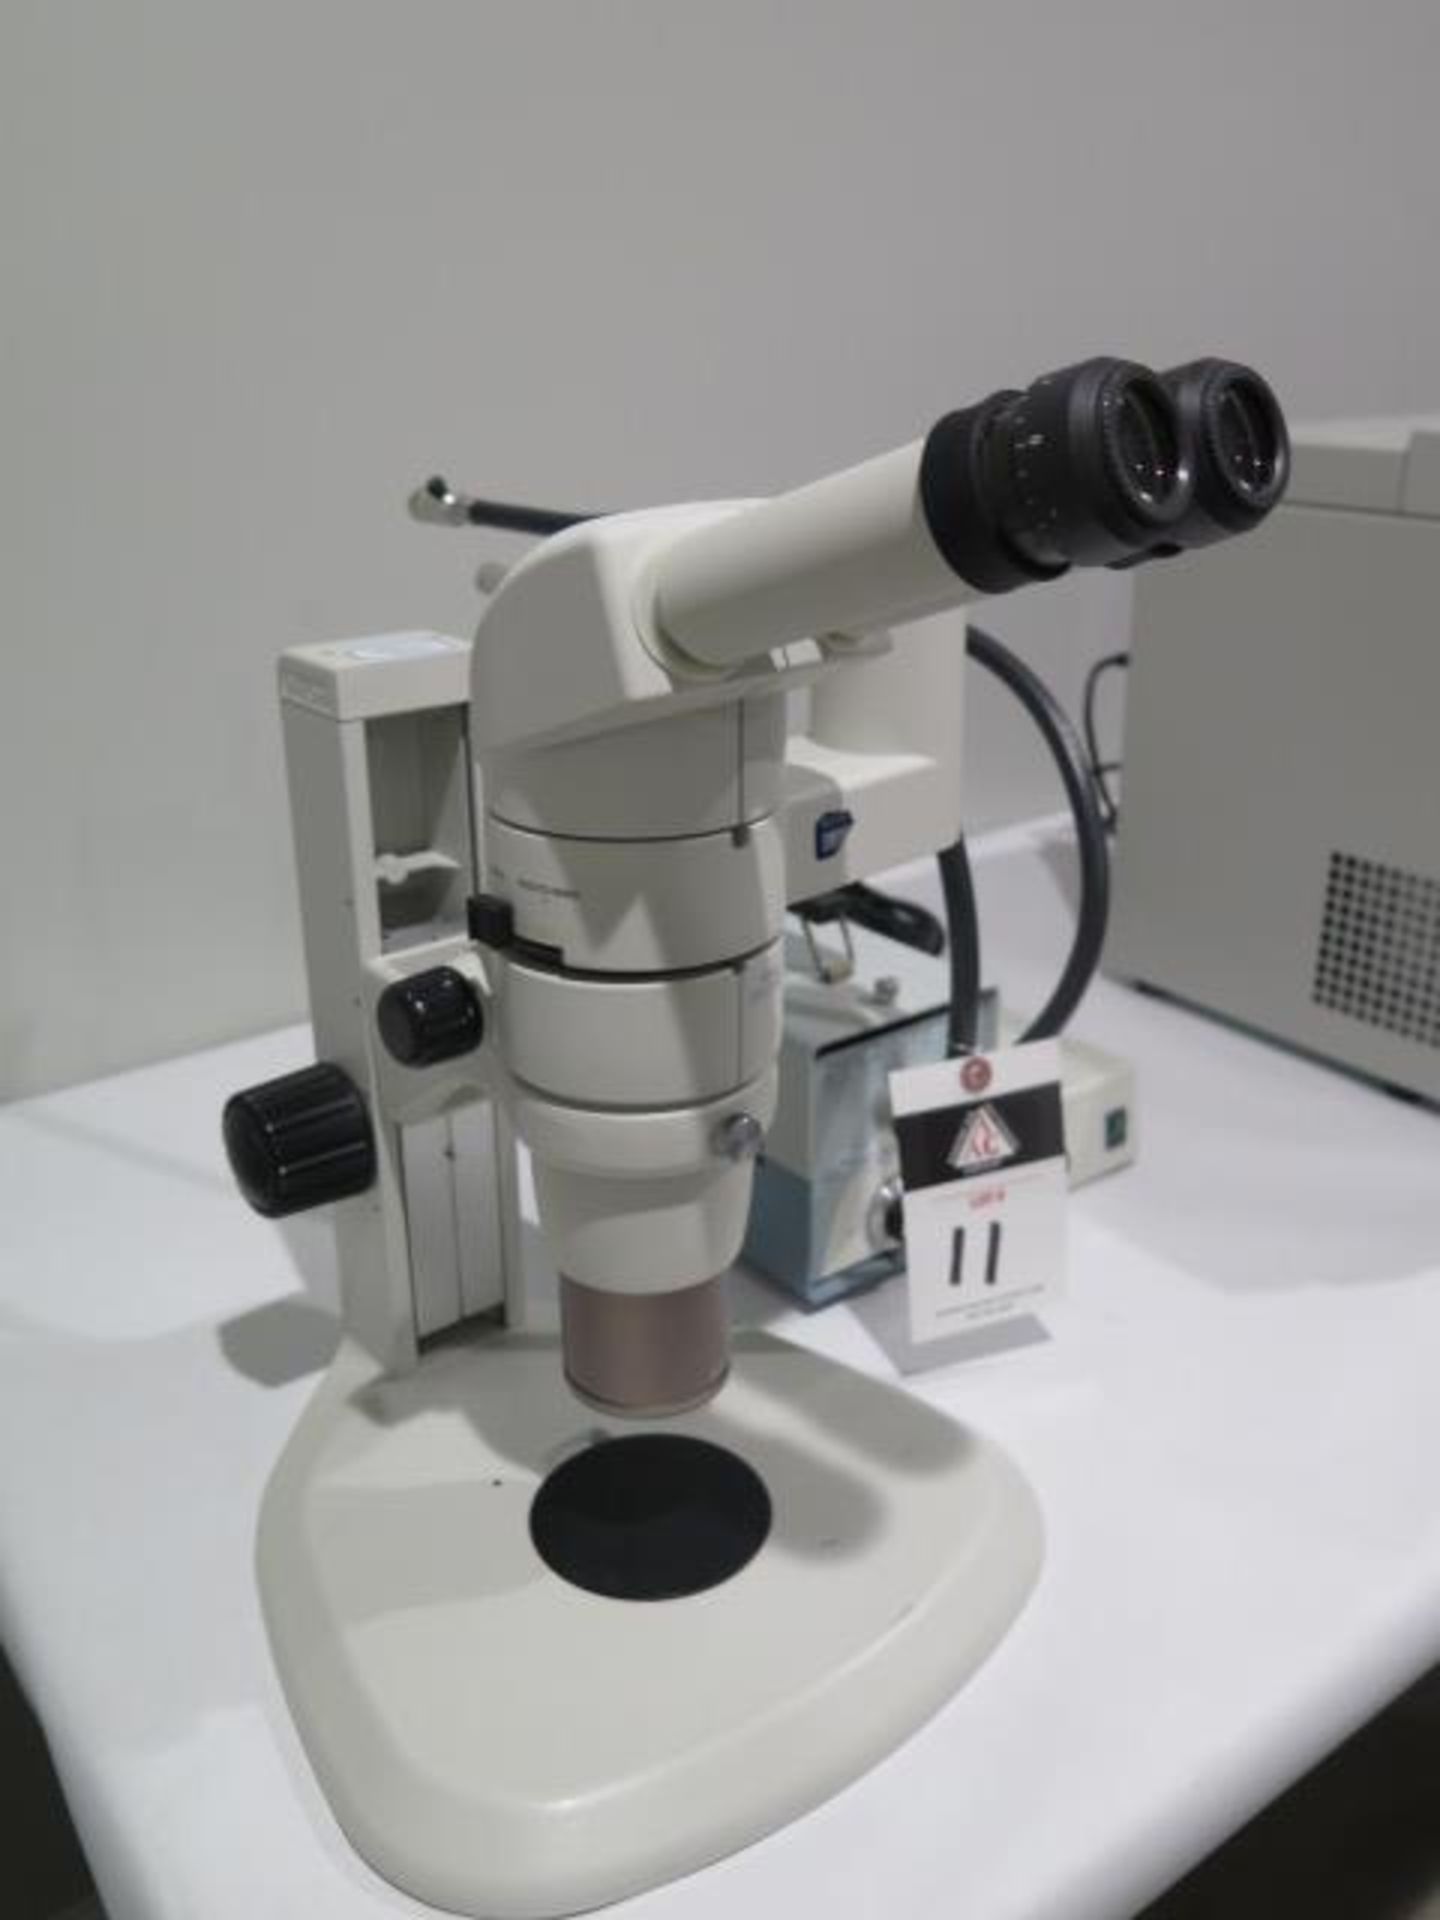 Nikon SMZ800 Monocular Microscope w/ Phototube Video Splitter Port (NO CAMERA), A.G. Heinze Dyna - Image 2 of 10